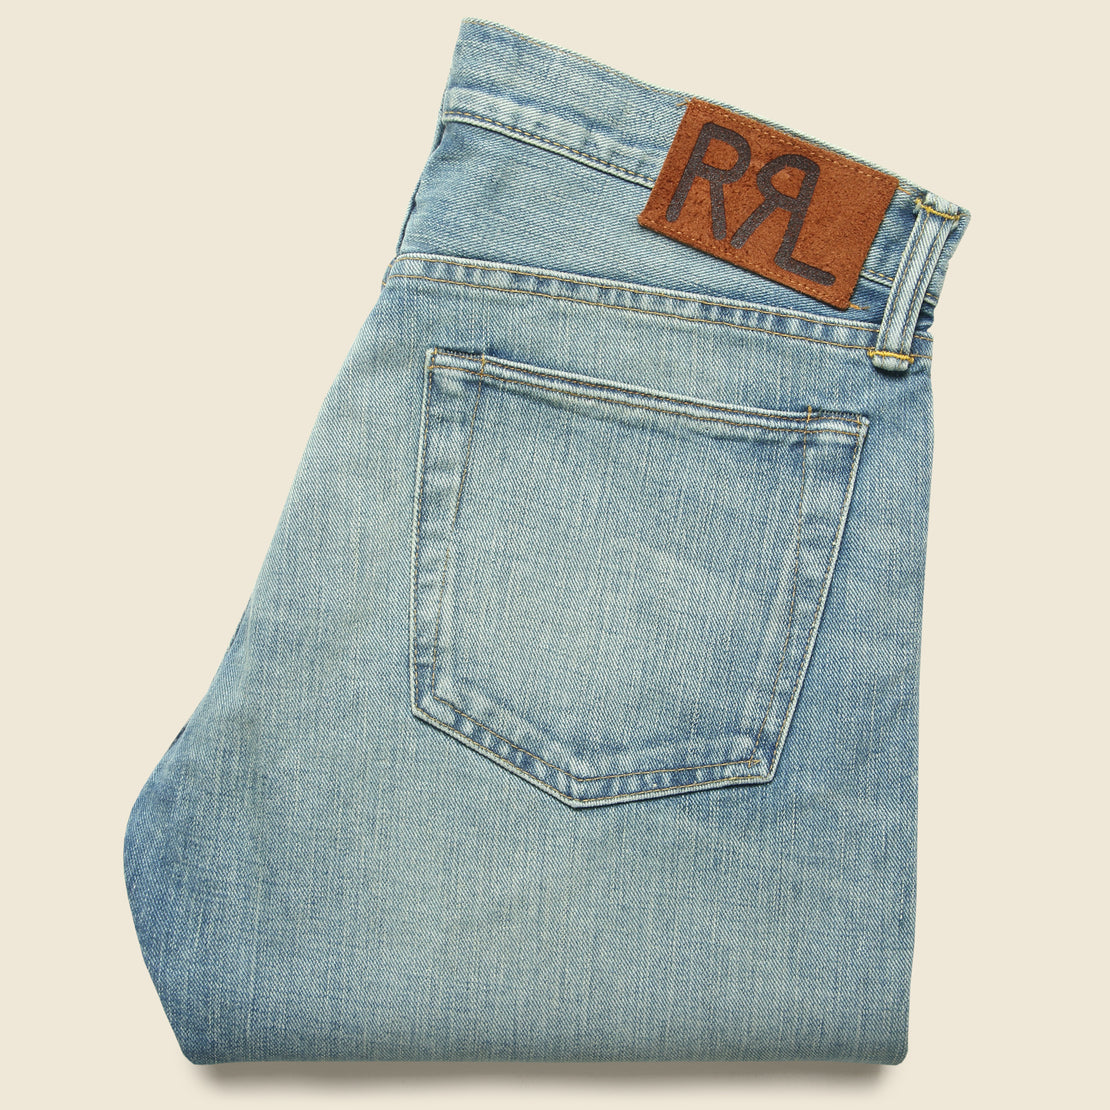 Slim Fit Jean - Otisfield Wash - RRL - STAG Provisions - Pants - Denim